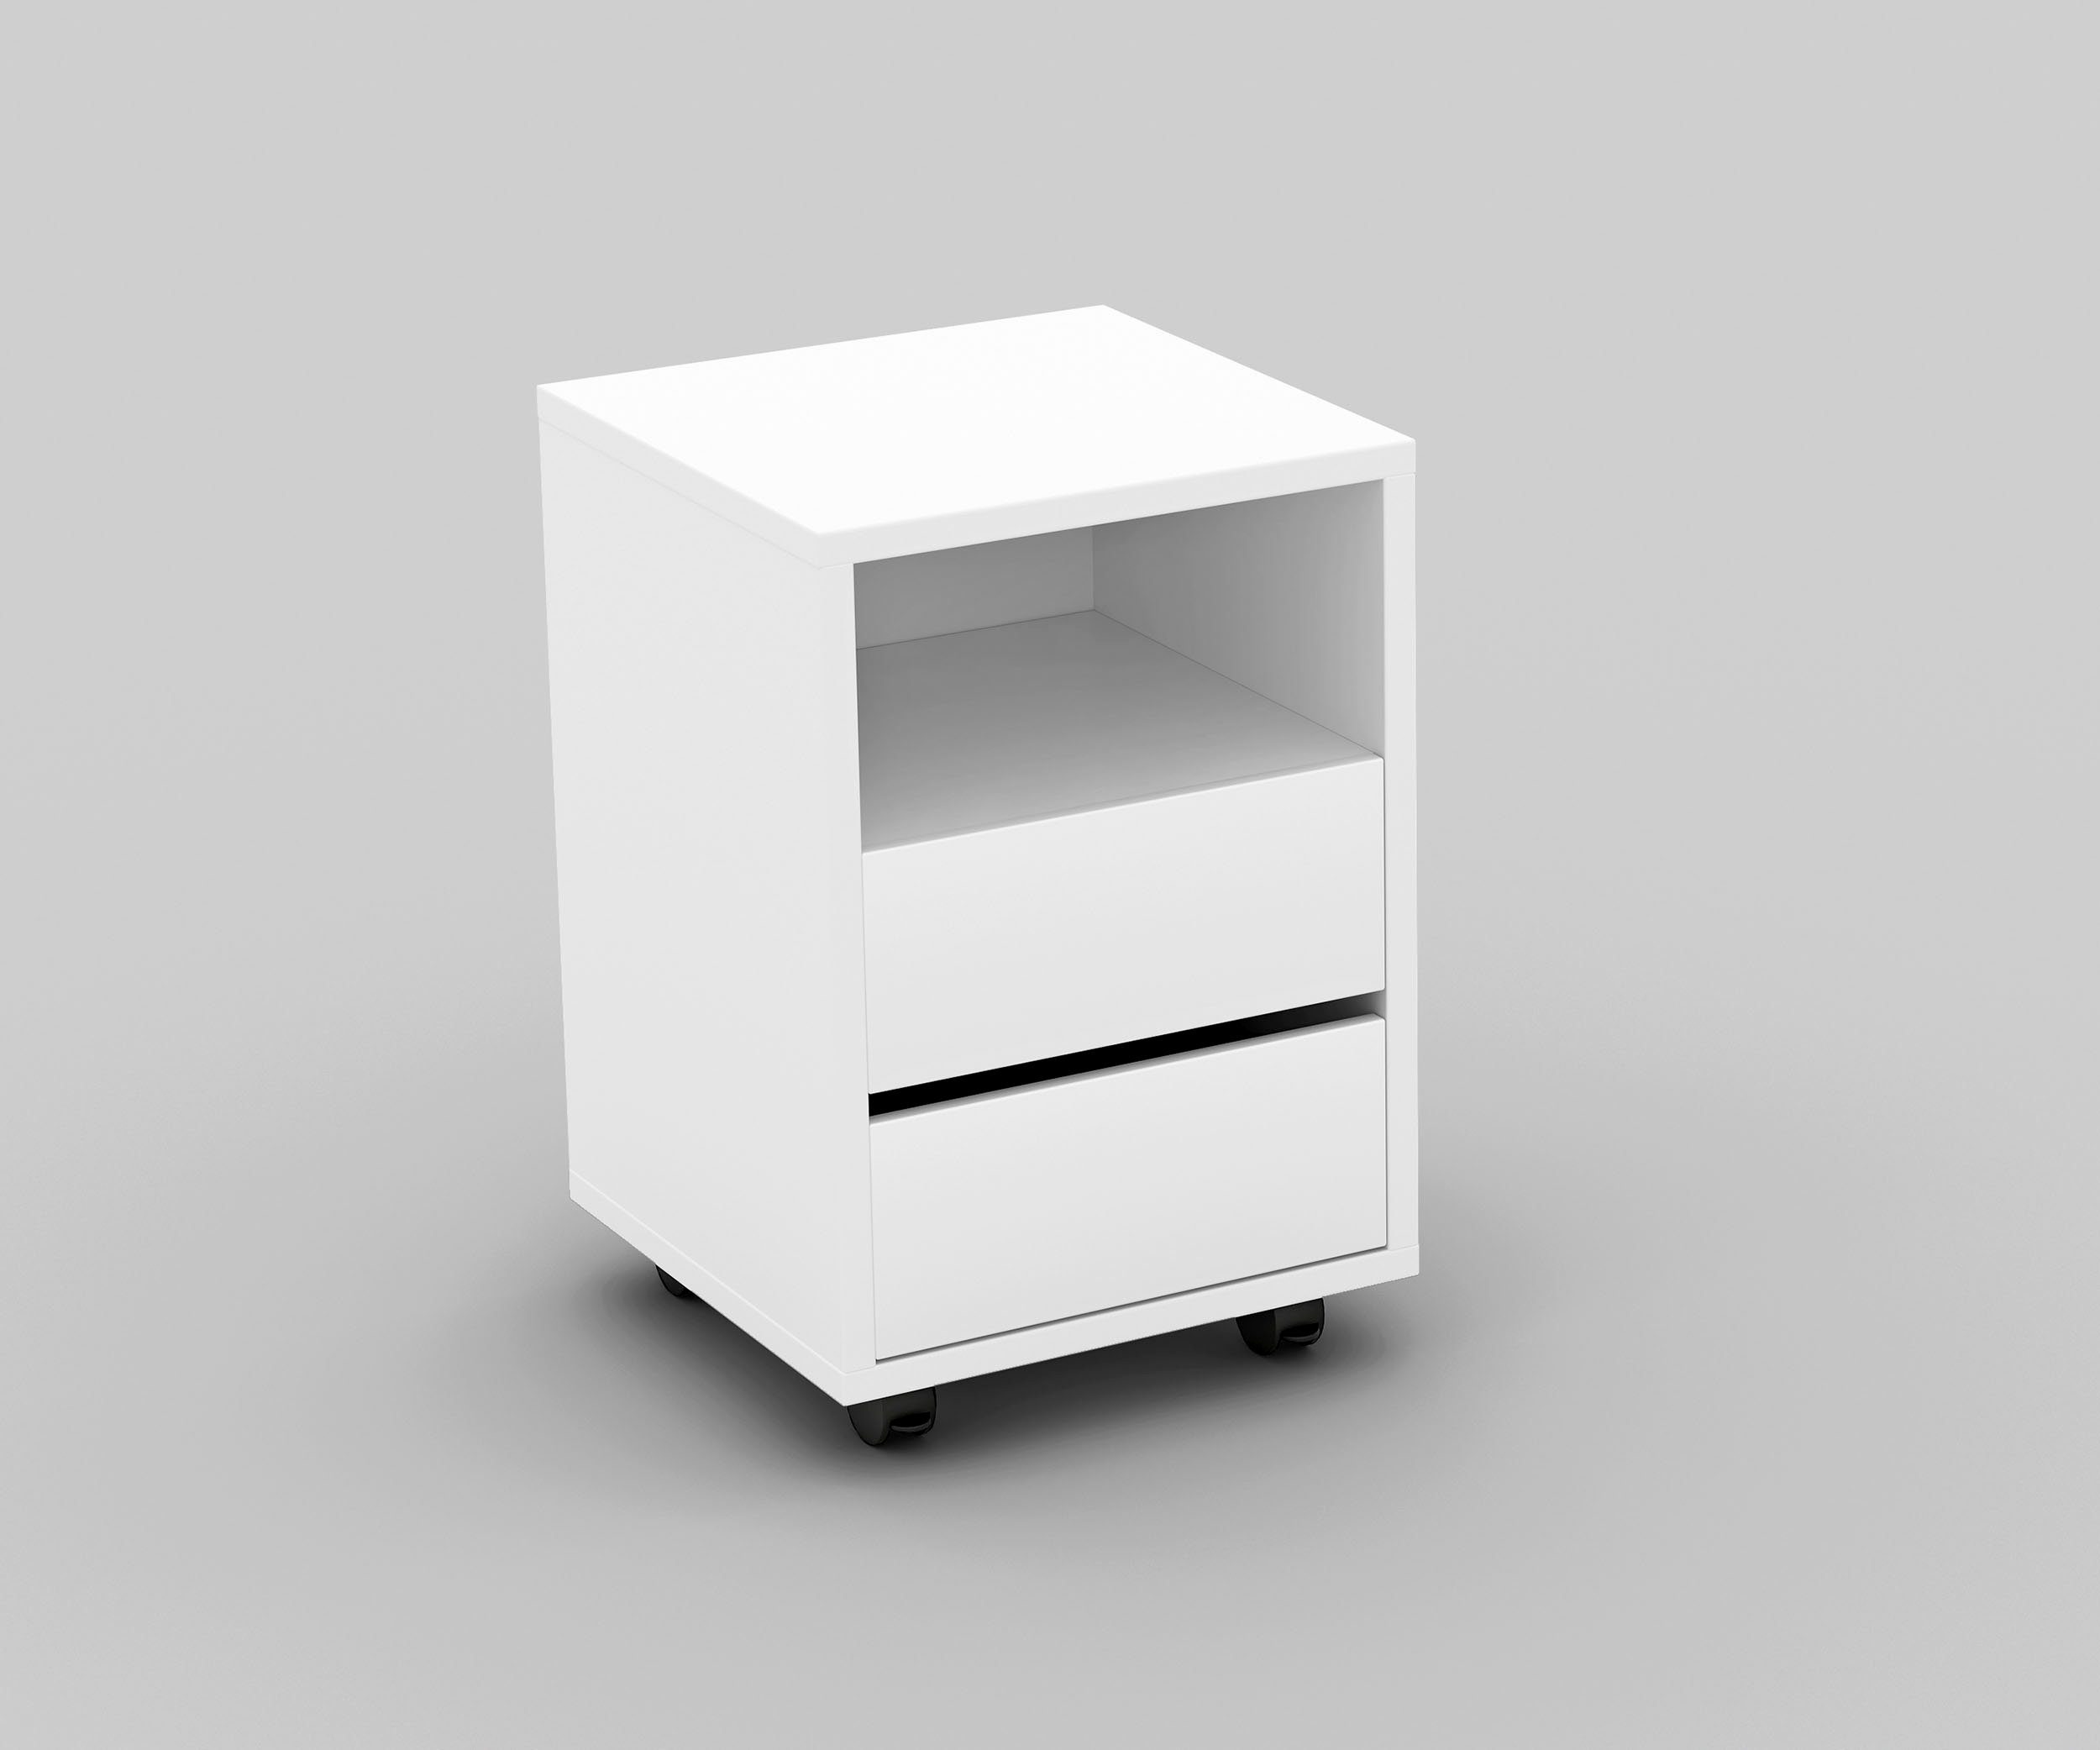 Helvetia Rollcontainer Agapi, Bürocontainer im modernen Design, 40x40x62 cm, 2 Schubkästen weiss